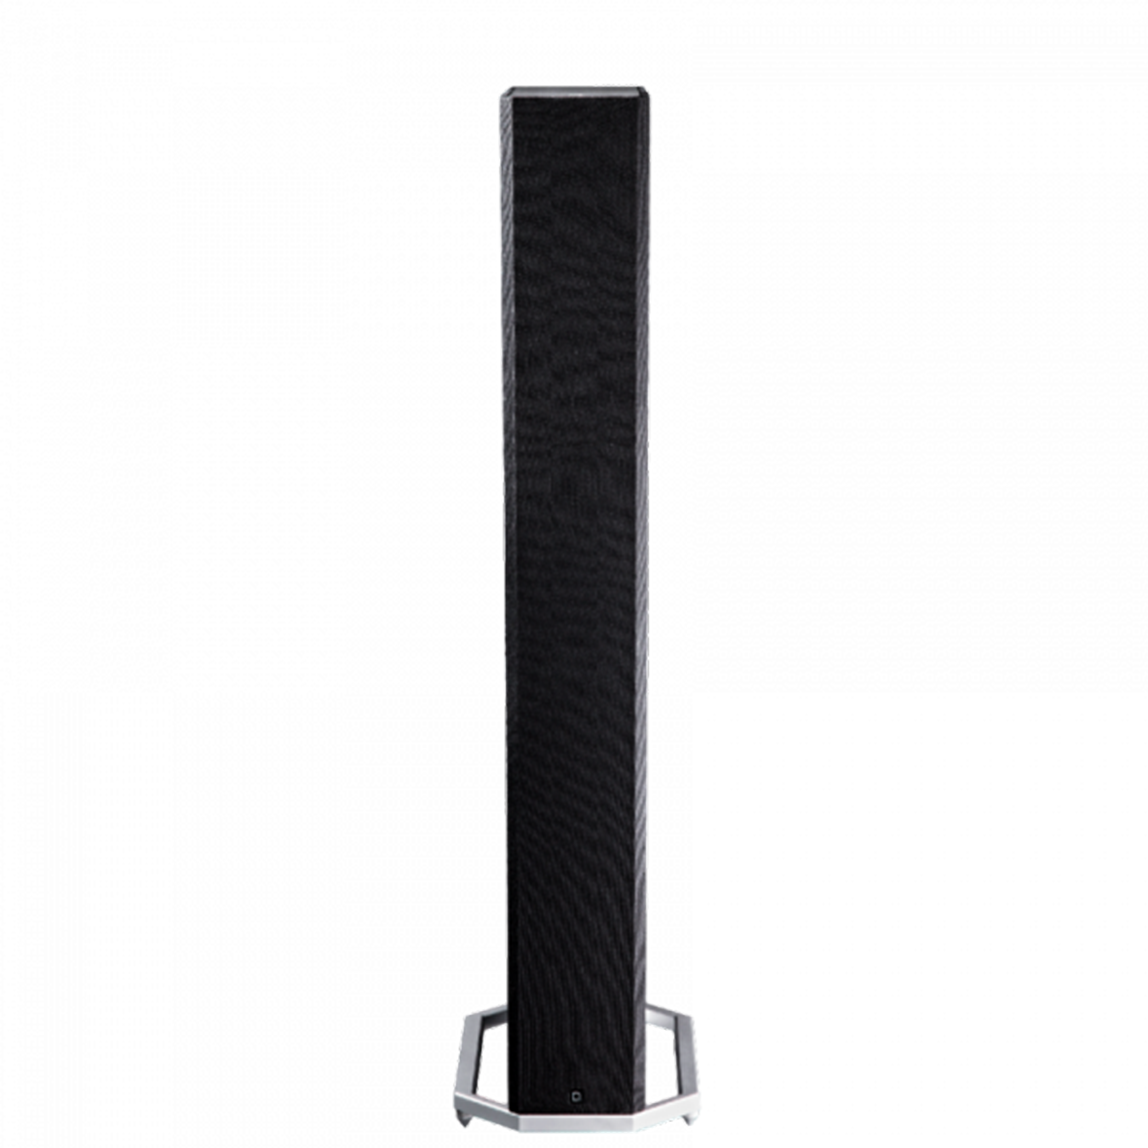 Definitive Technology BP9060 High-Performance Floor Standing Speaker (Pair)